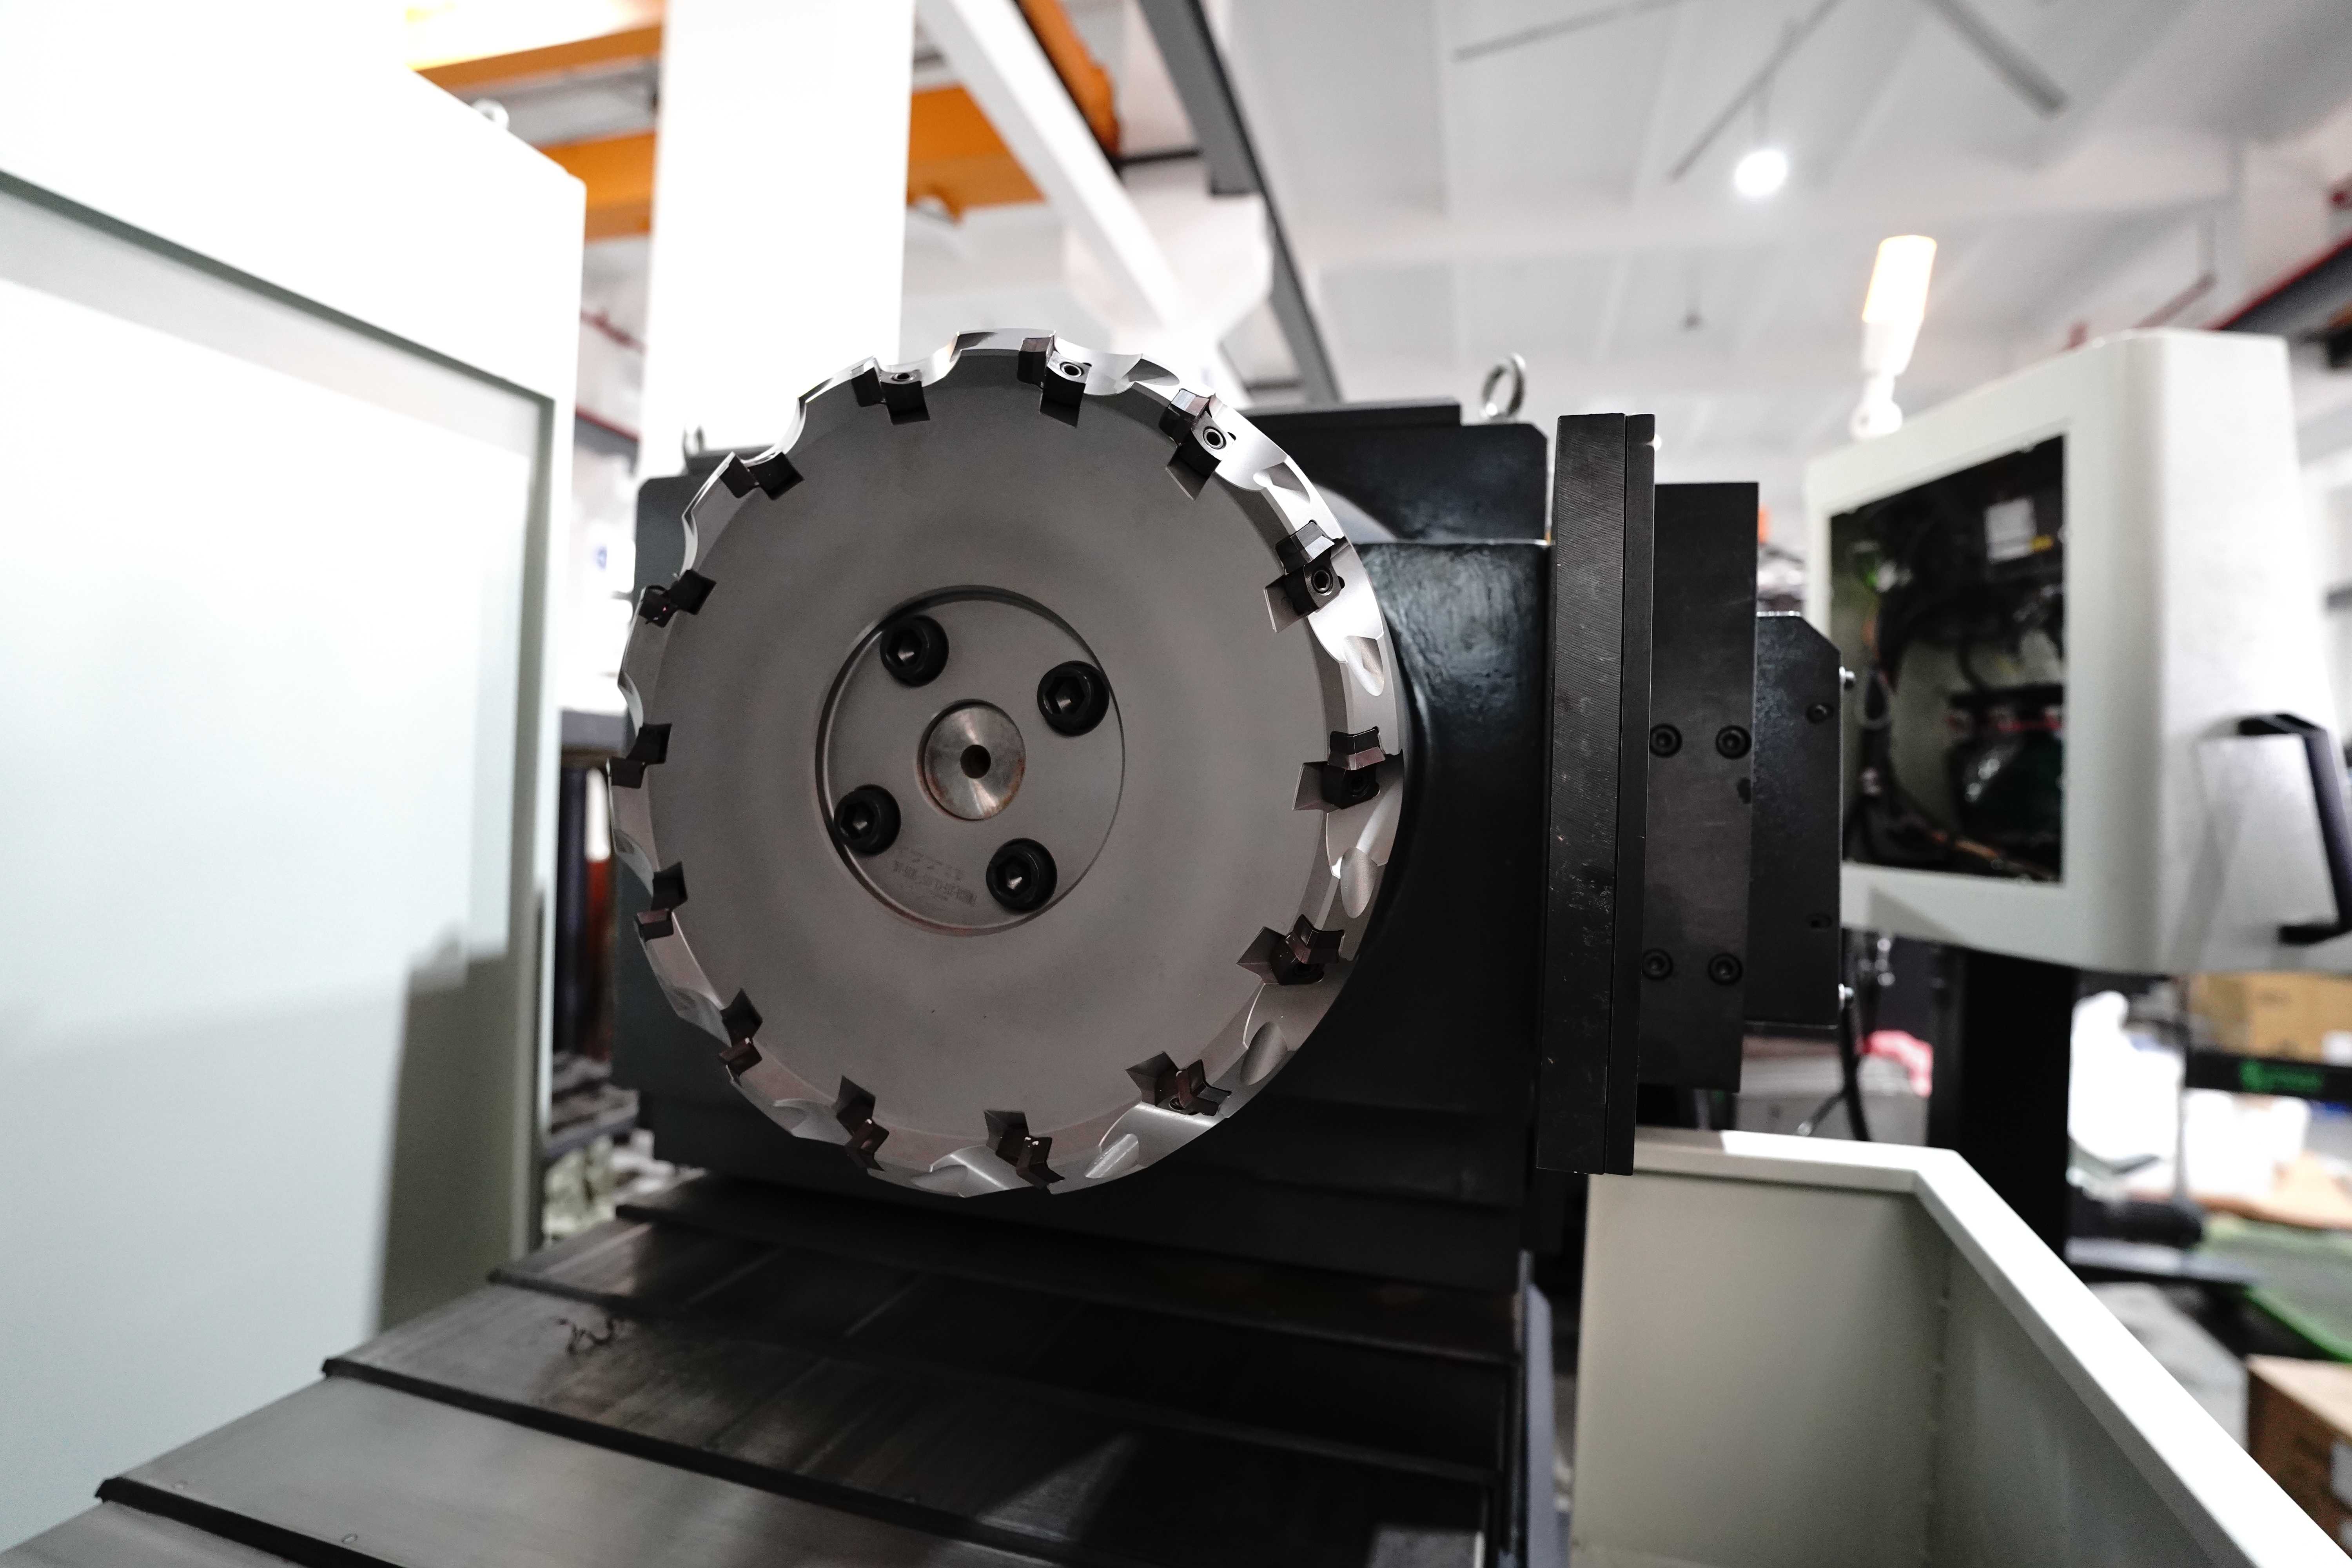 GooDa CNC Twin Headed Milling Machine Powerful Cutting : 2 X 4.0mm ,Ultra- Wide Travel